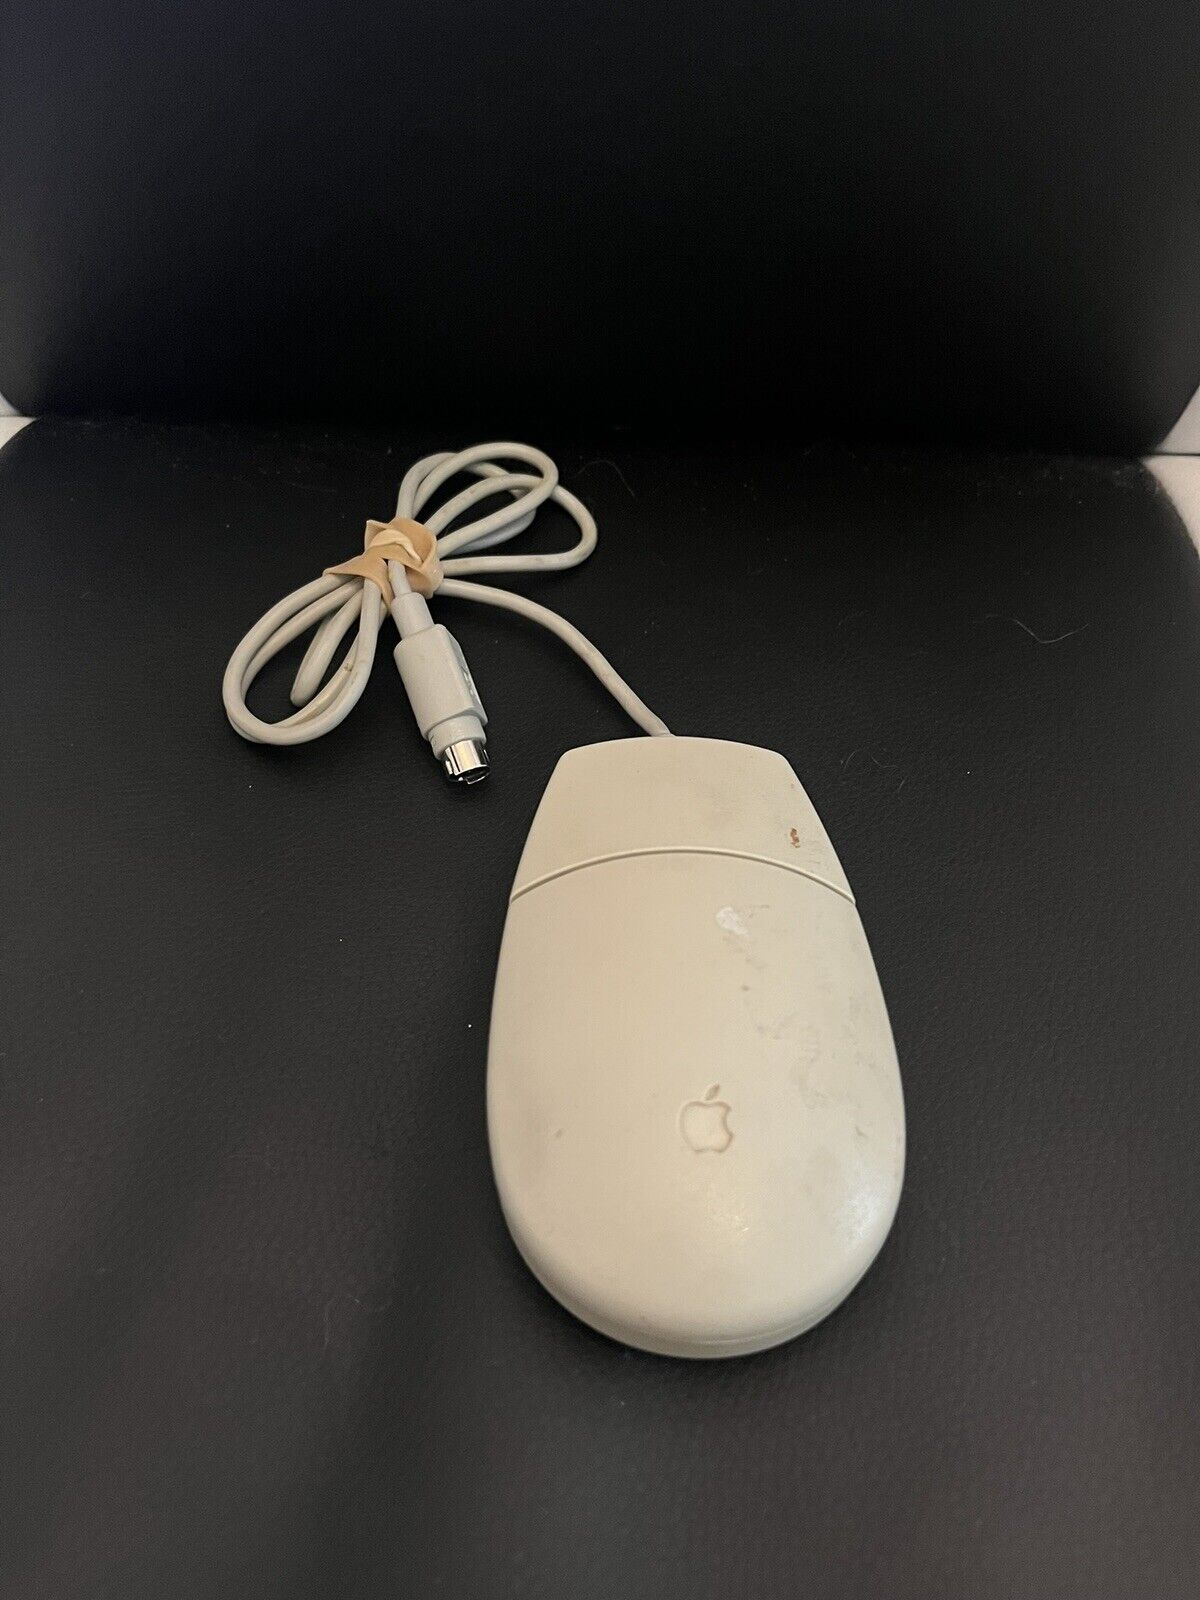 Apple OEM Apple Desktop Mouse II Genuine Vintage One Button Mouse ADB M2706